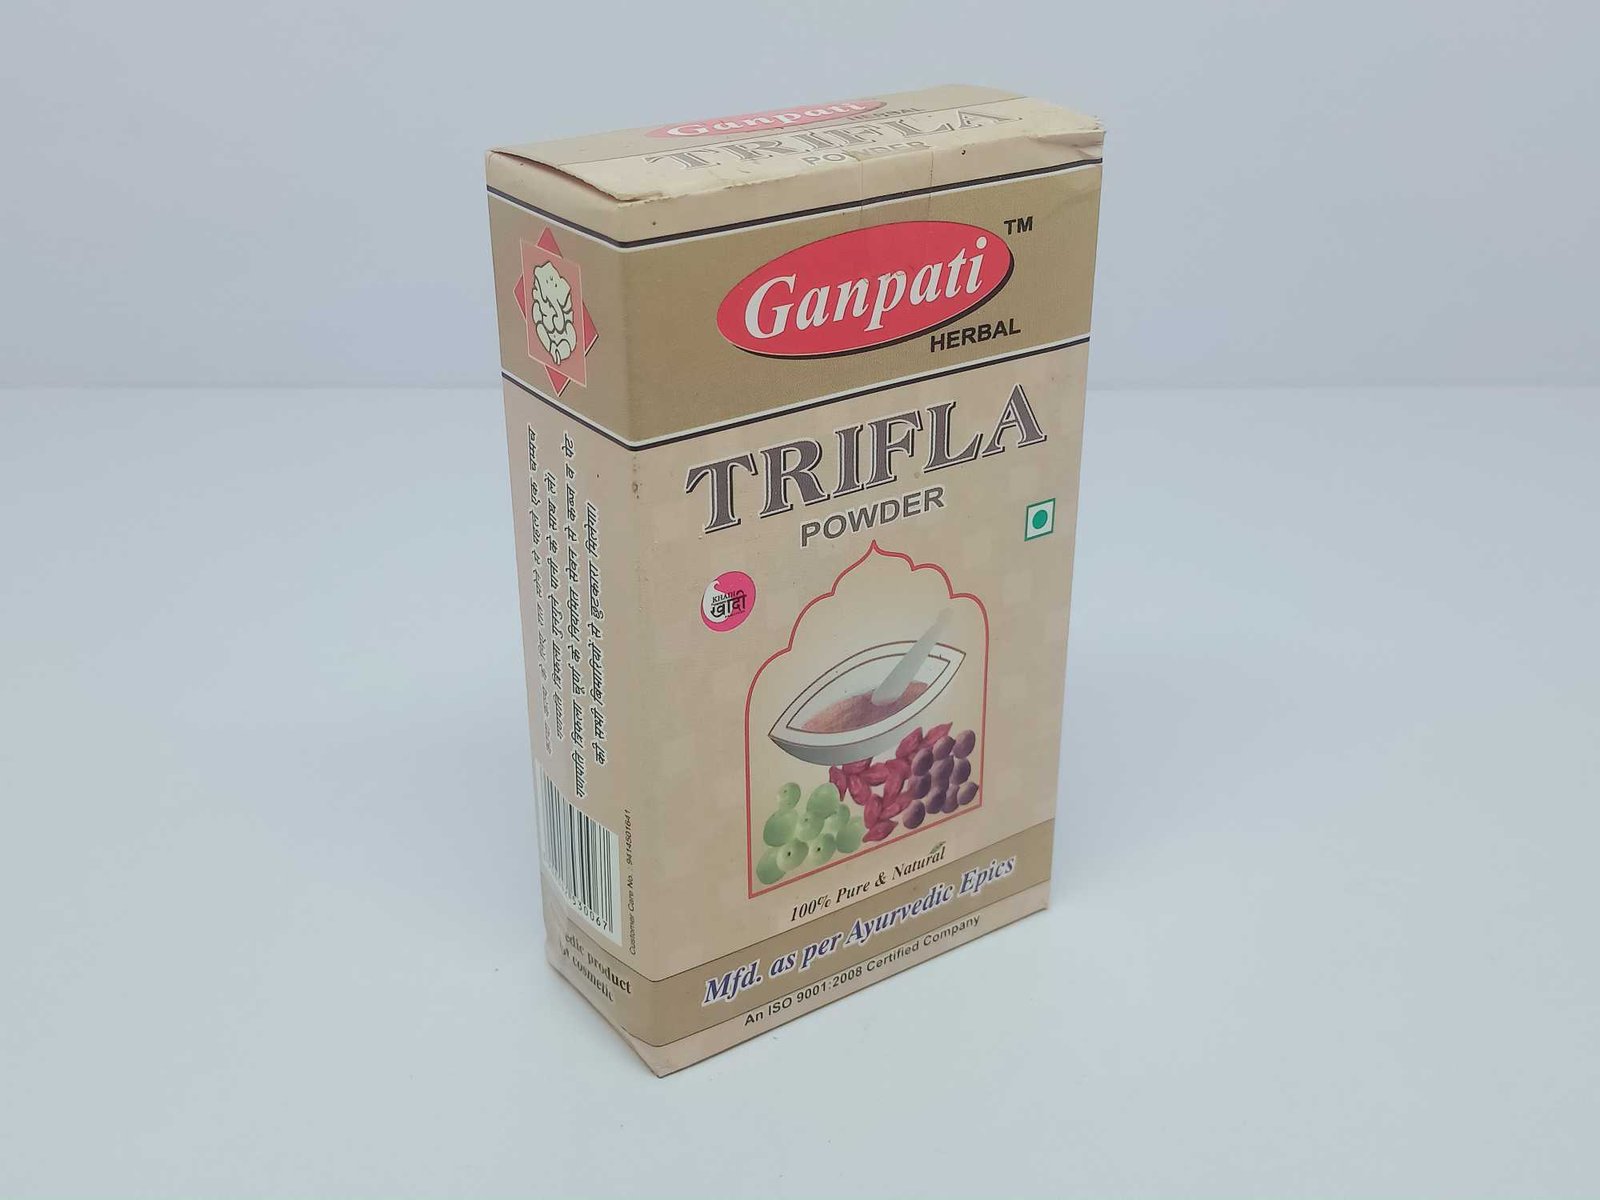 Ganpati Herbal Trifla Powder, 200 gram